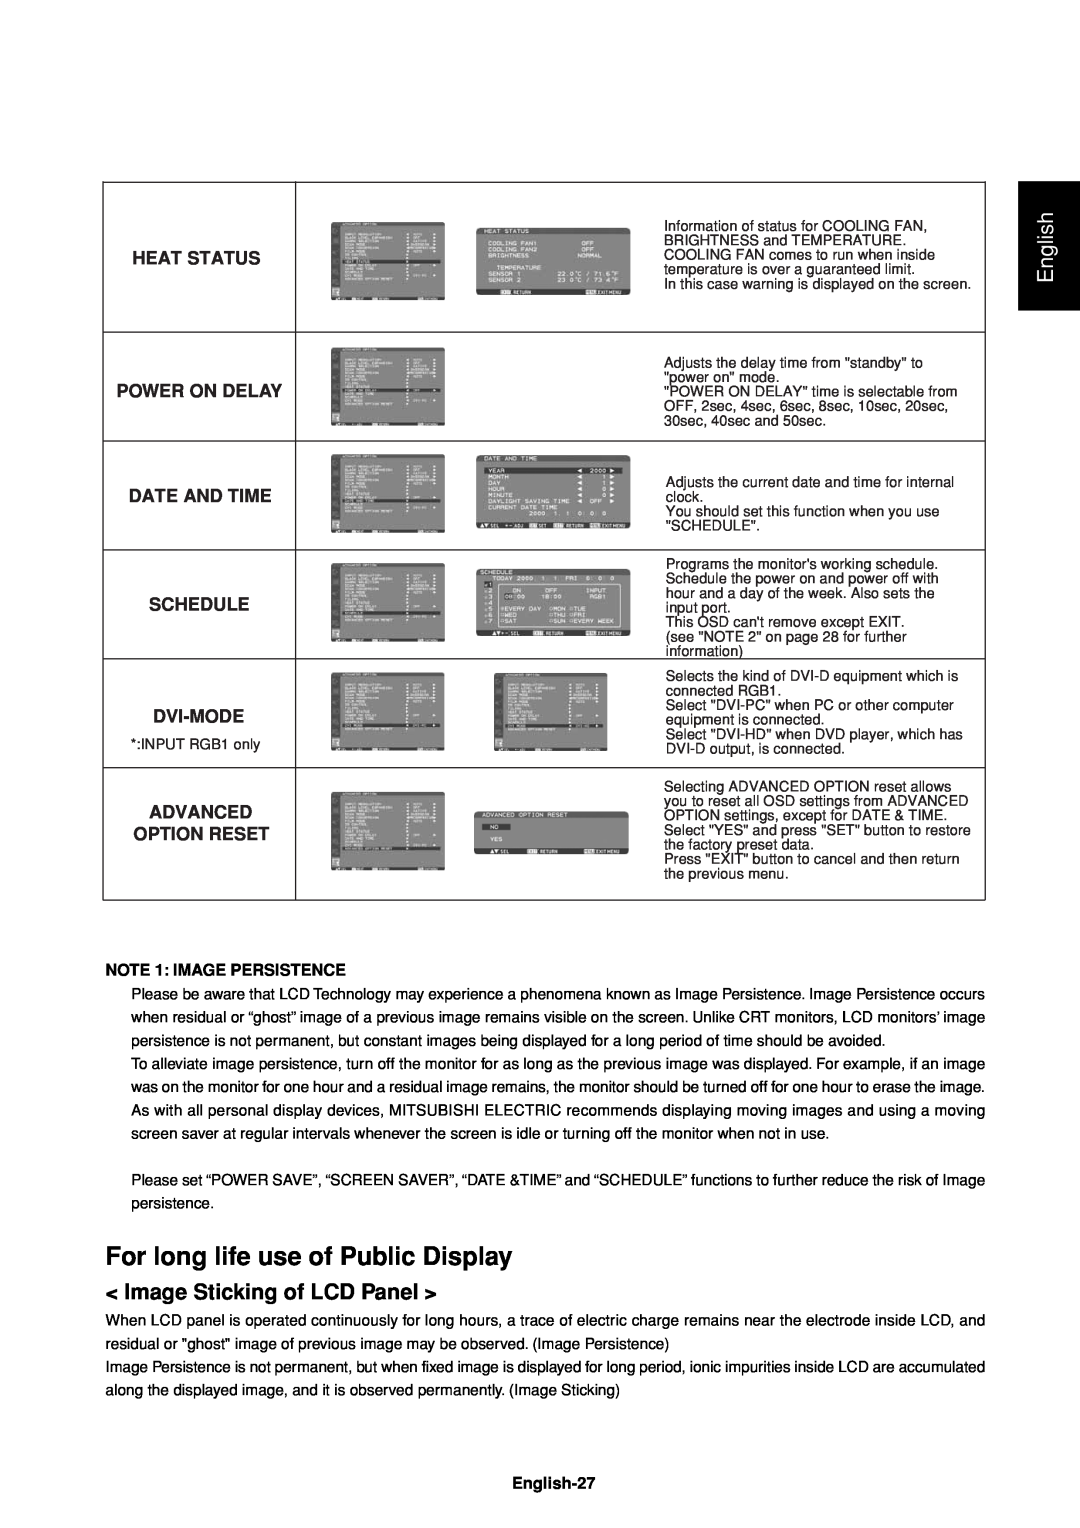 Mitsubishi Electronics LDT37IV (BH544) manual For long life use of Public Display, Image Sticking of LCD Panel, English 